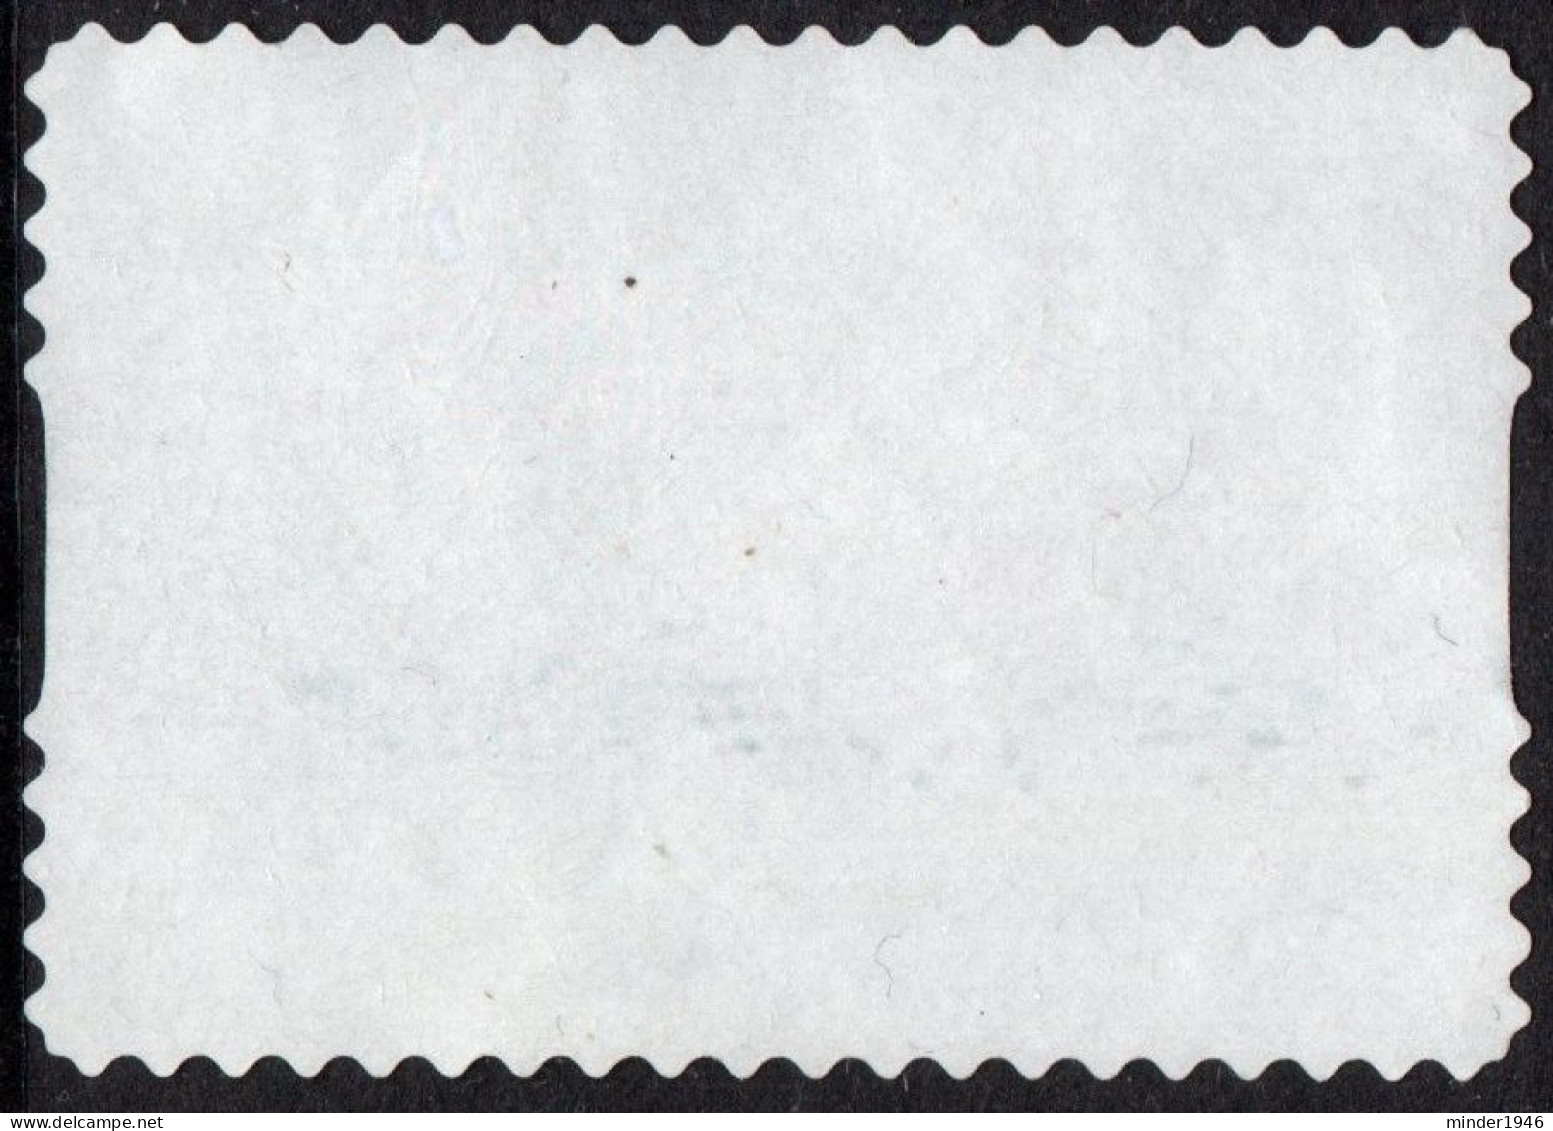 AUSTRALIA 2014 QEII 70c Multicoloured, Australian Racecourses - Flemington VIC Self Adhesive Stamps FU - Gebraucht